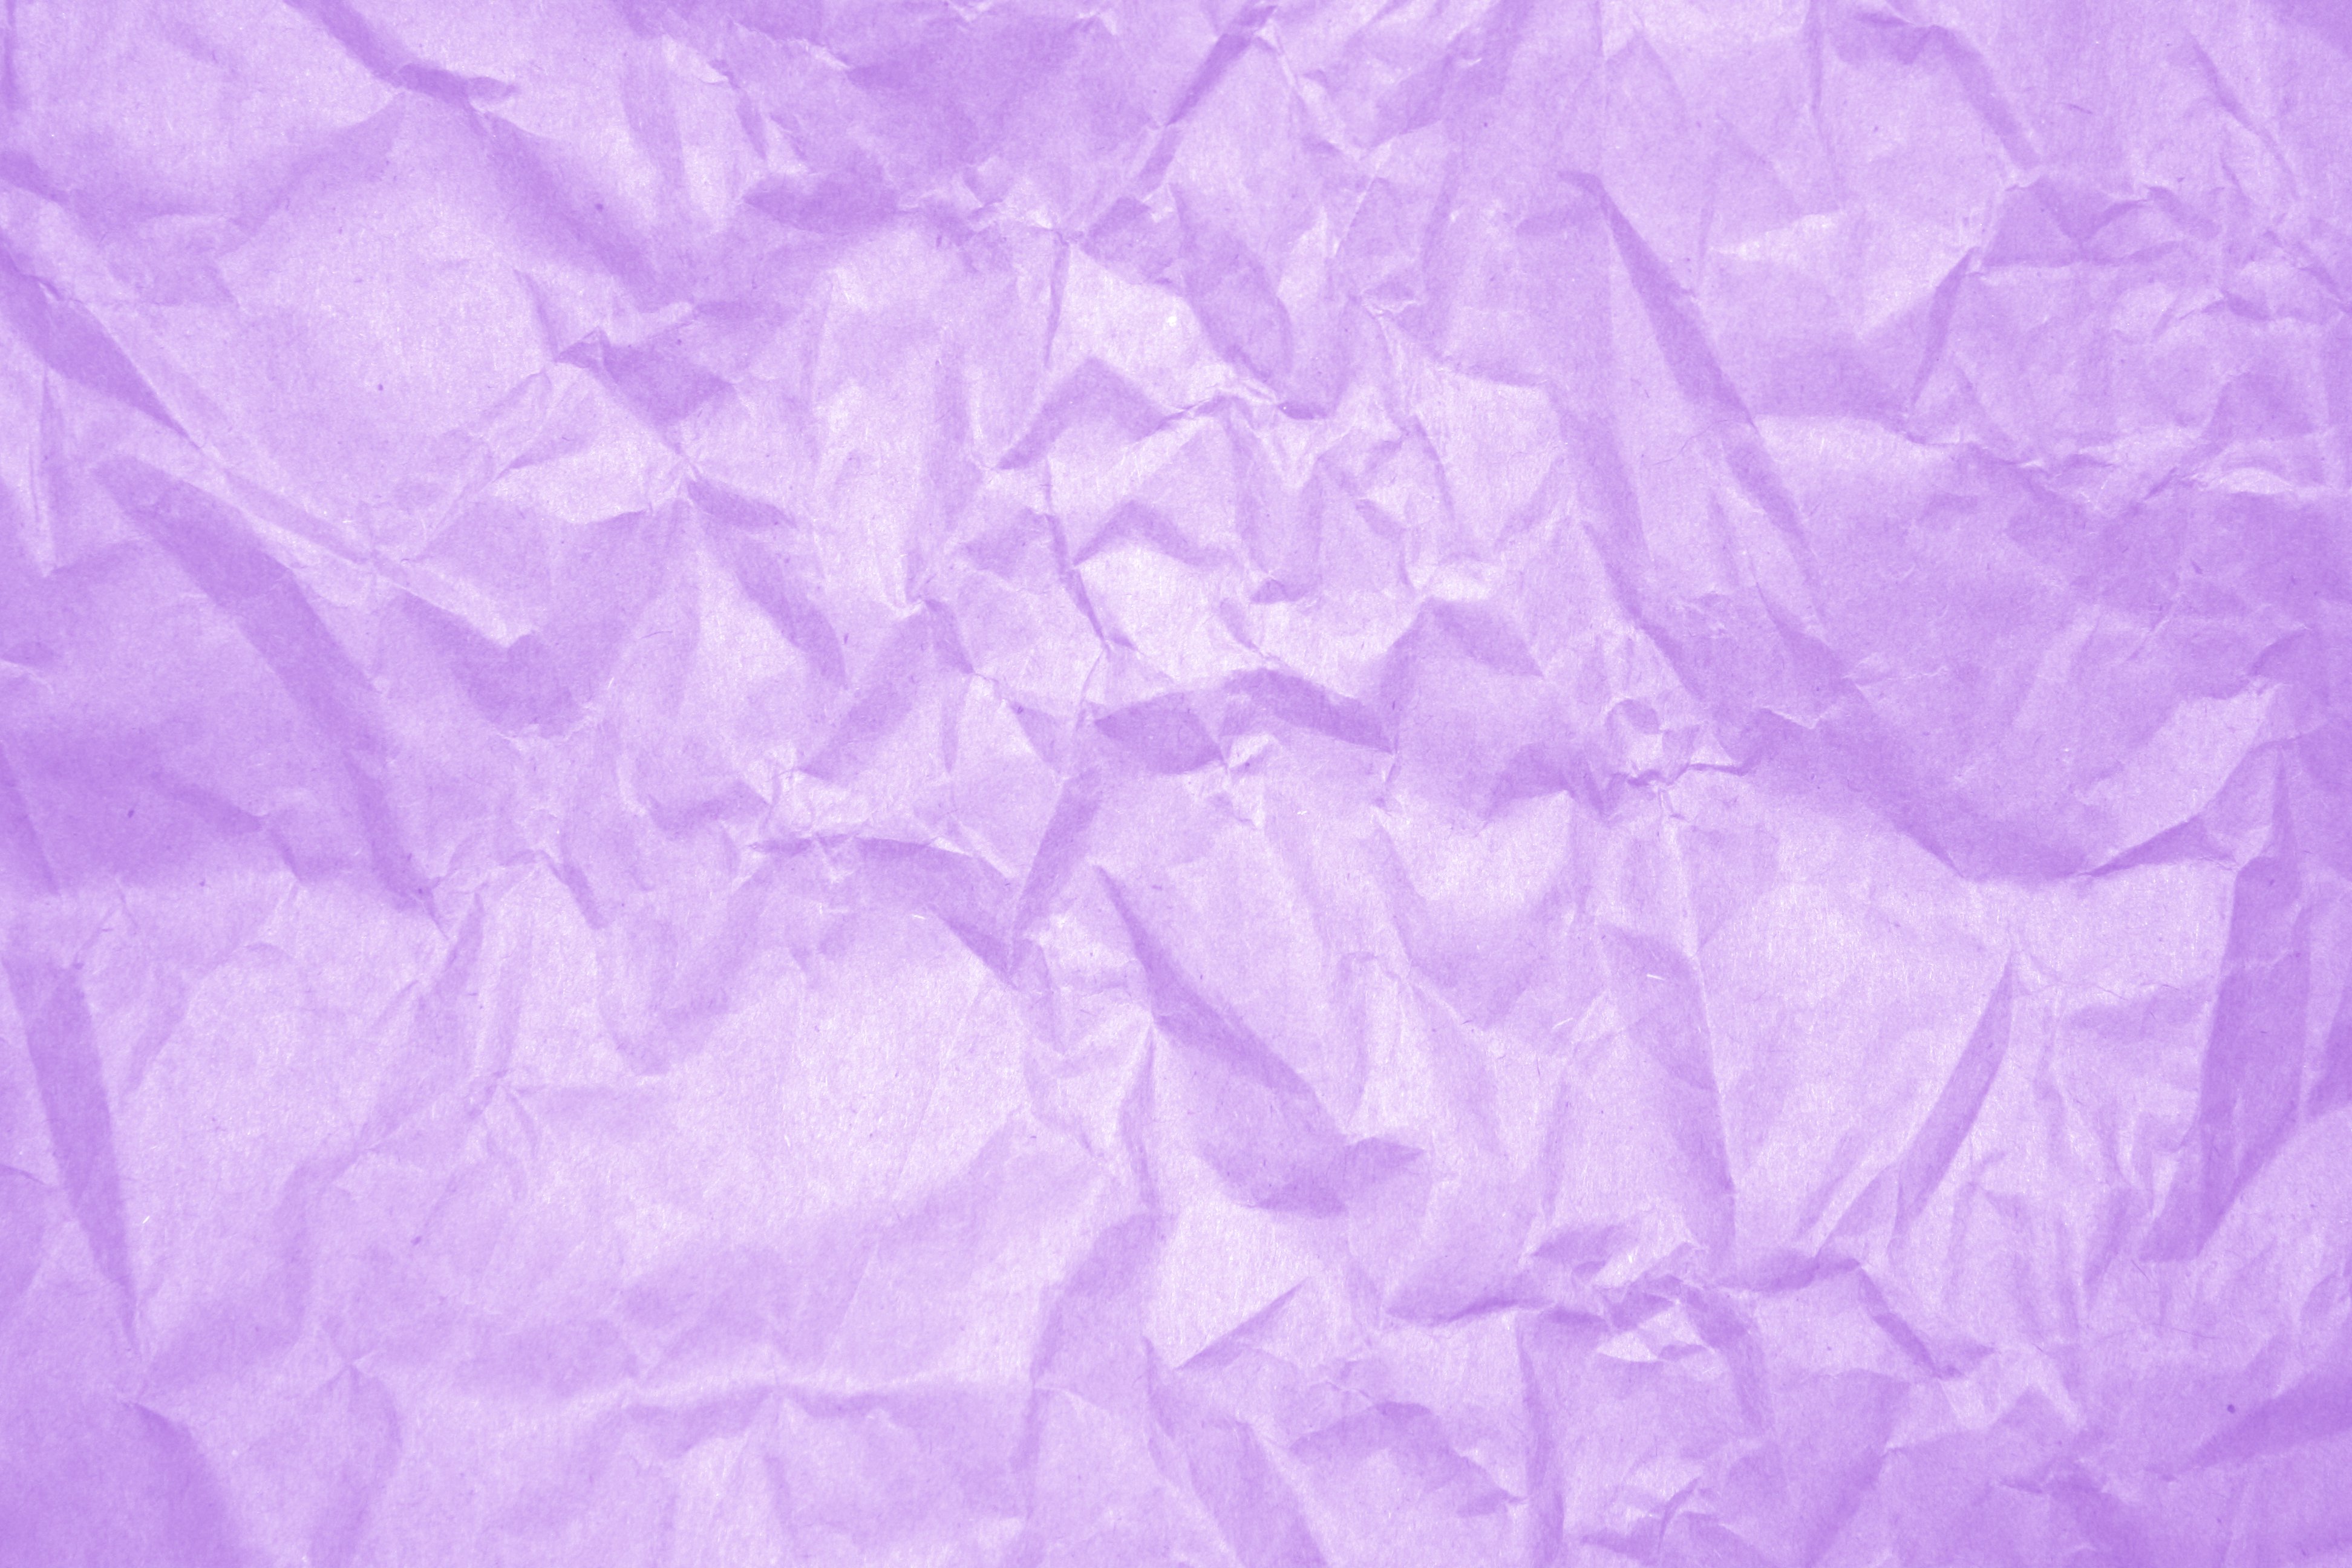 Crumpled Lavender Paper Texture Picture Free Photograph Photos